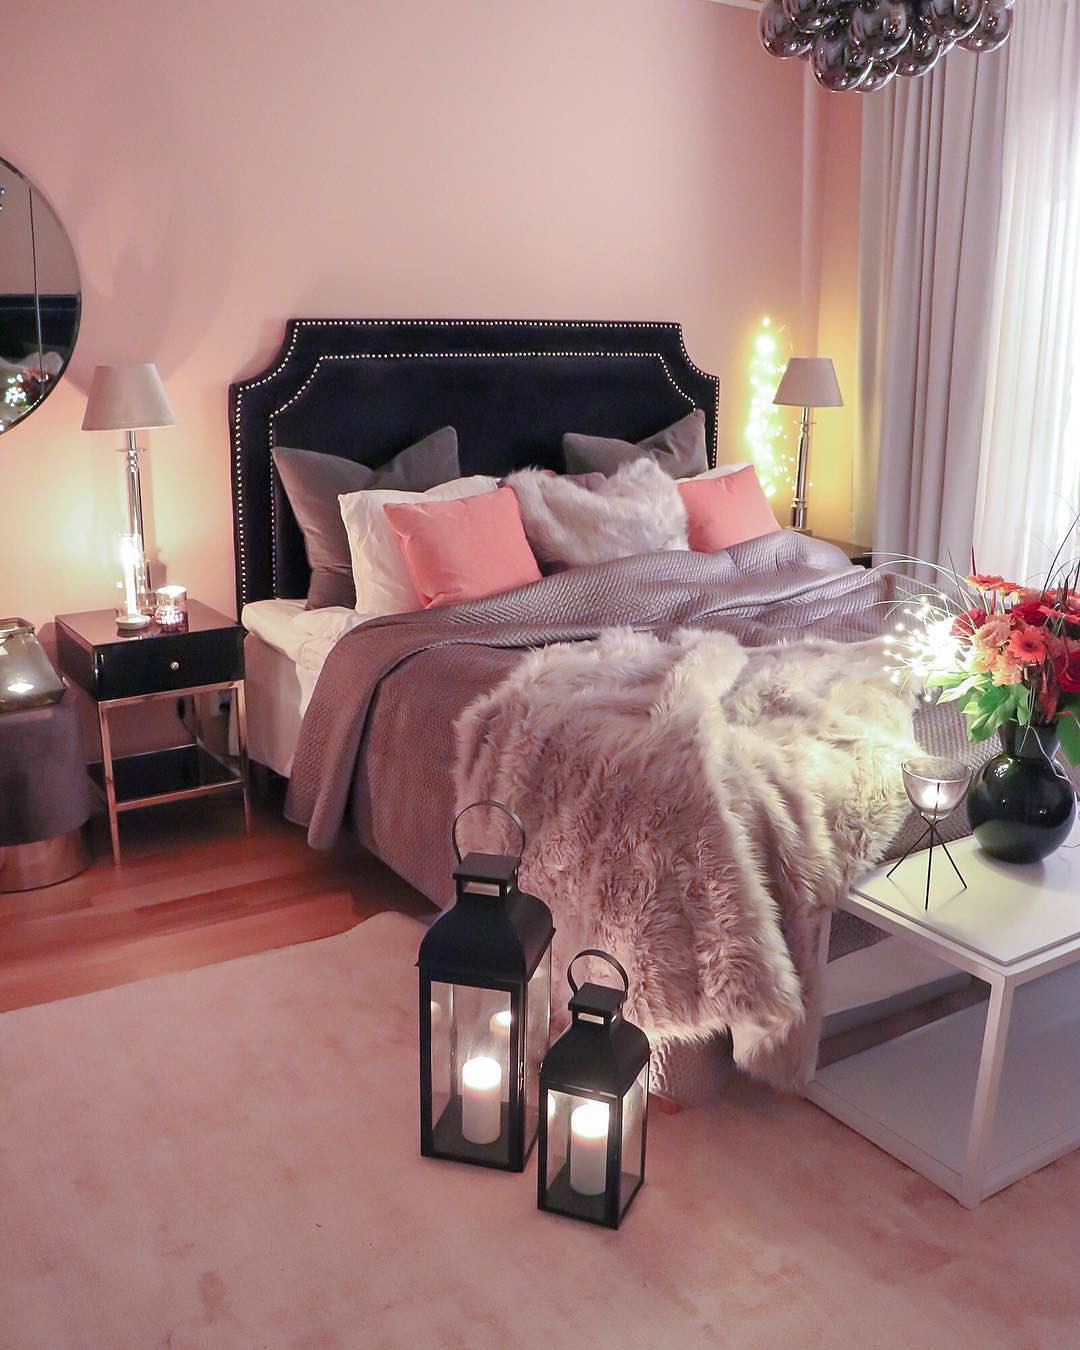 55 Creative Bohemian Bedroom Decor Ideas #dormroom #dormroomdecor #collegedormroom